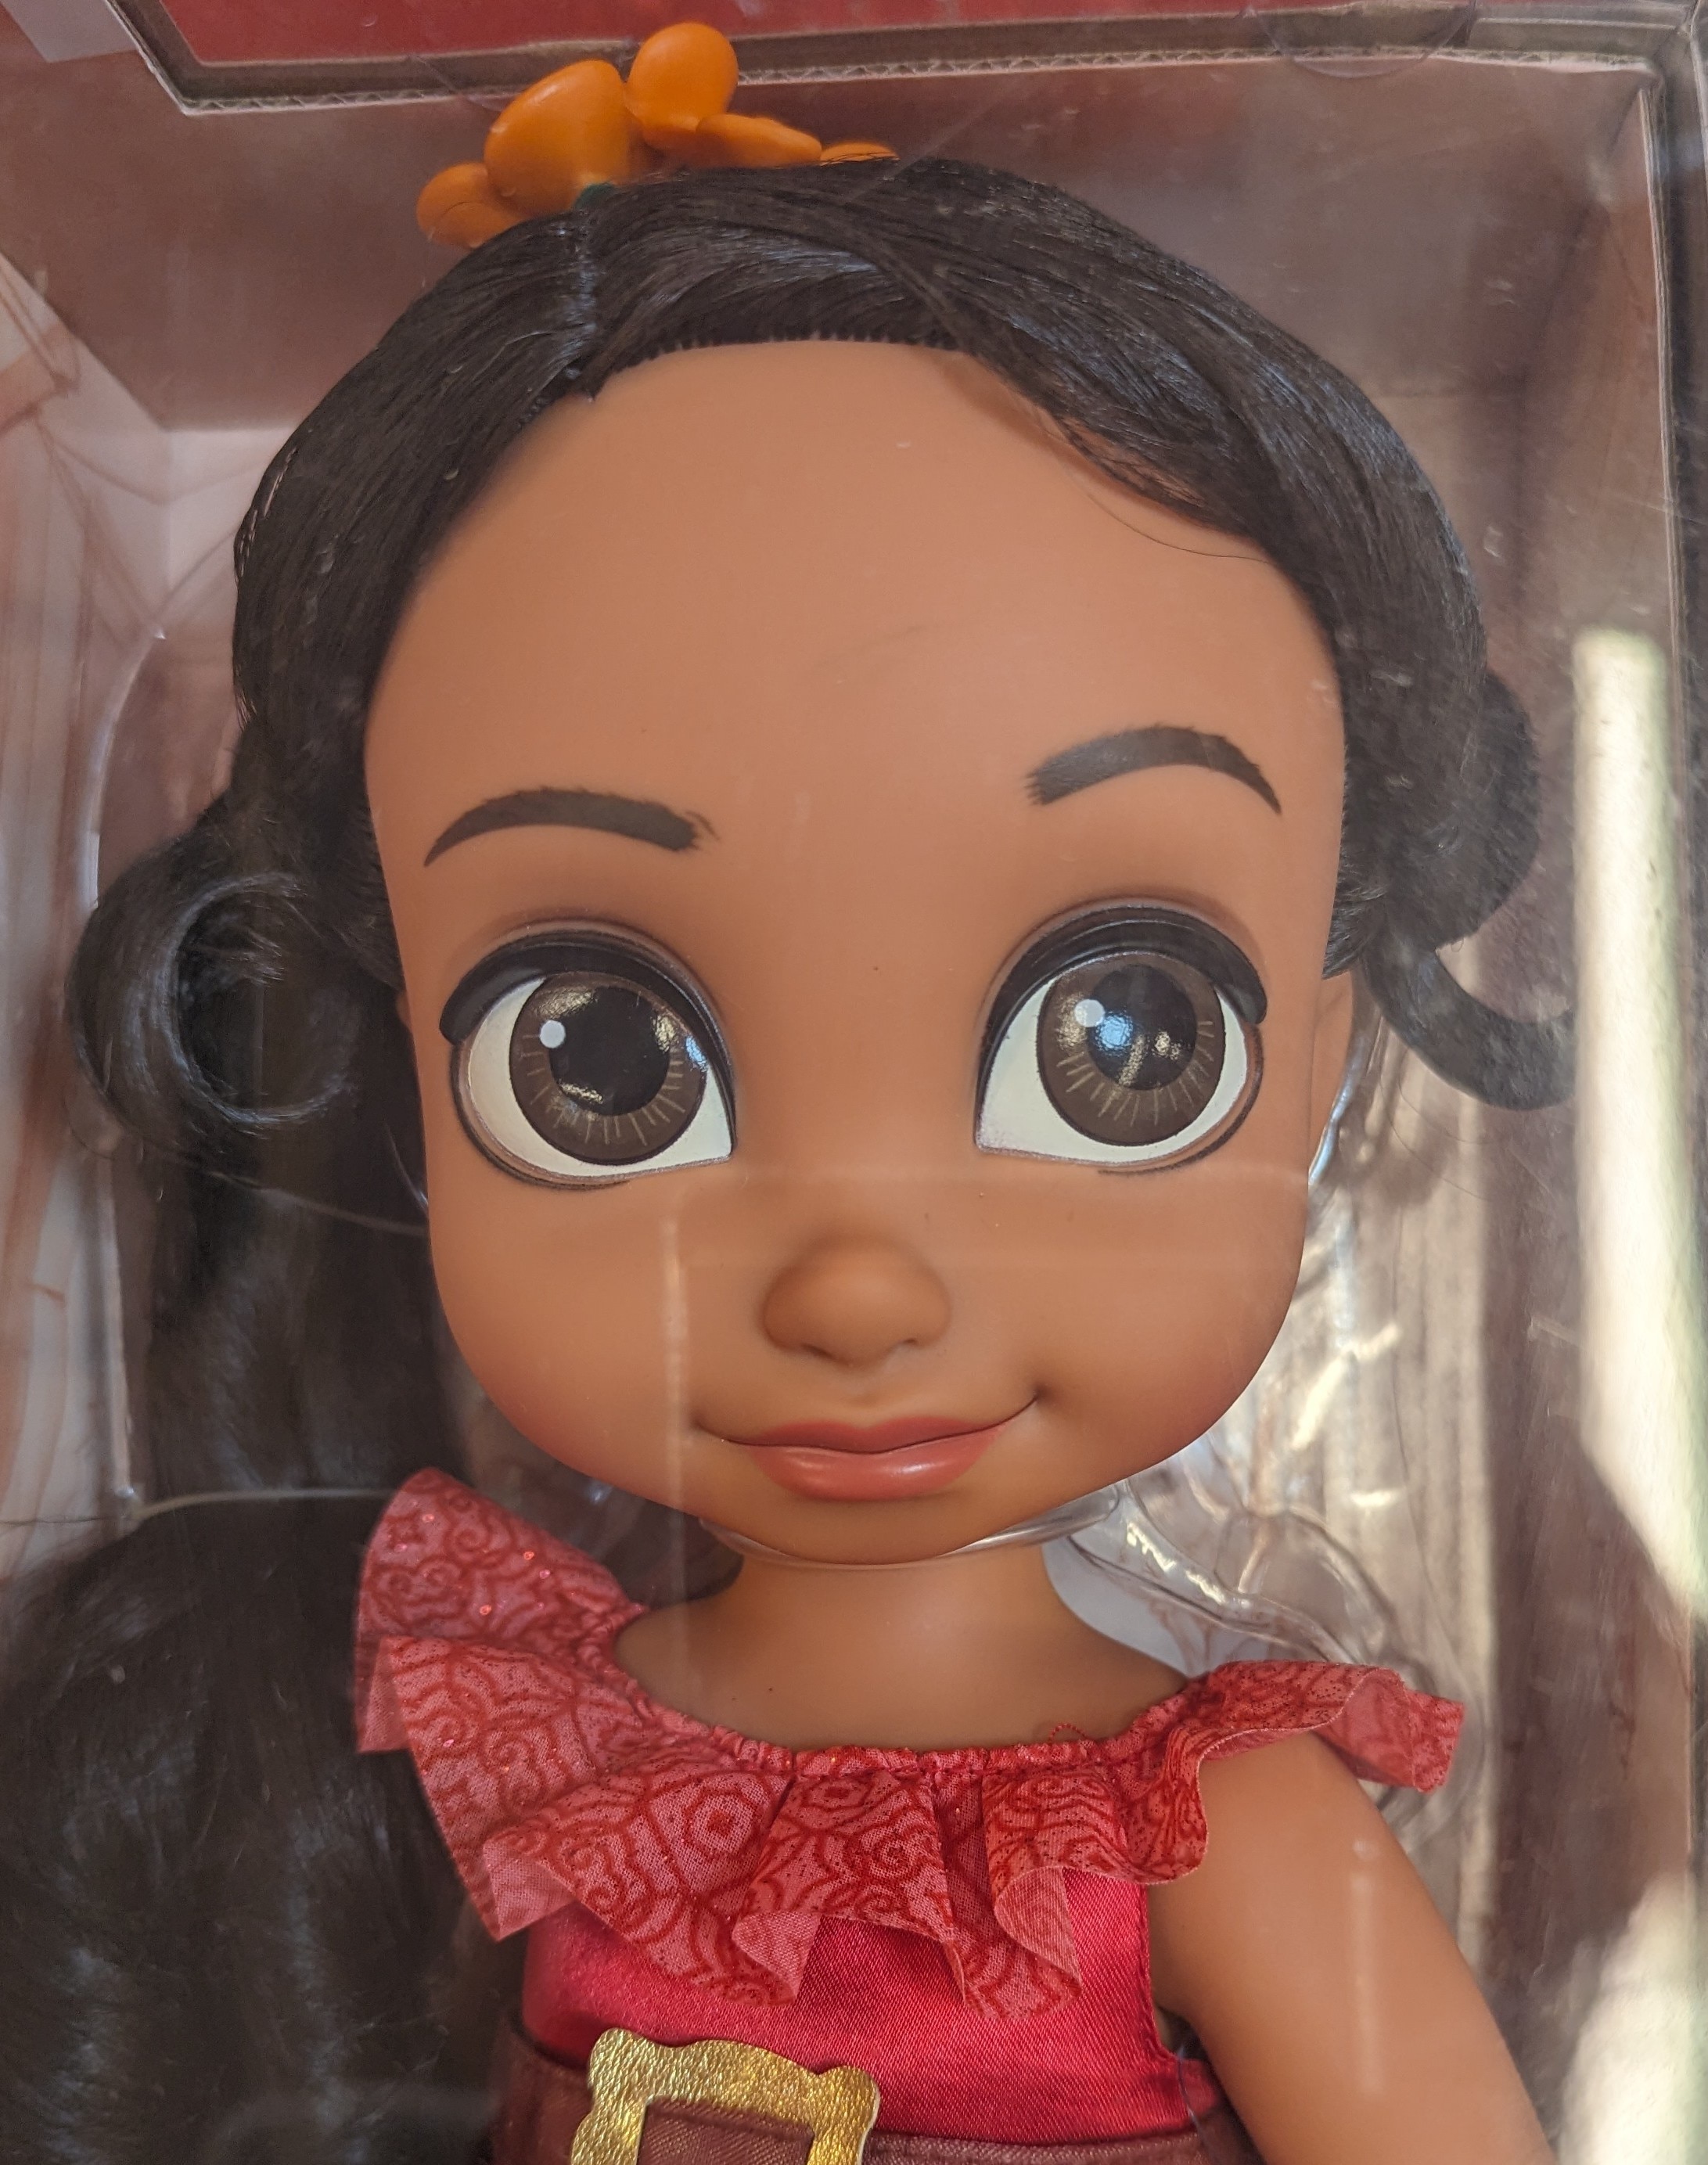 Brand new Elena of Avalor animator doll from Disney store …